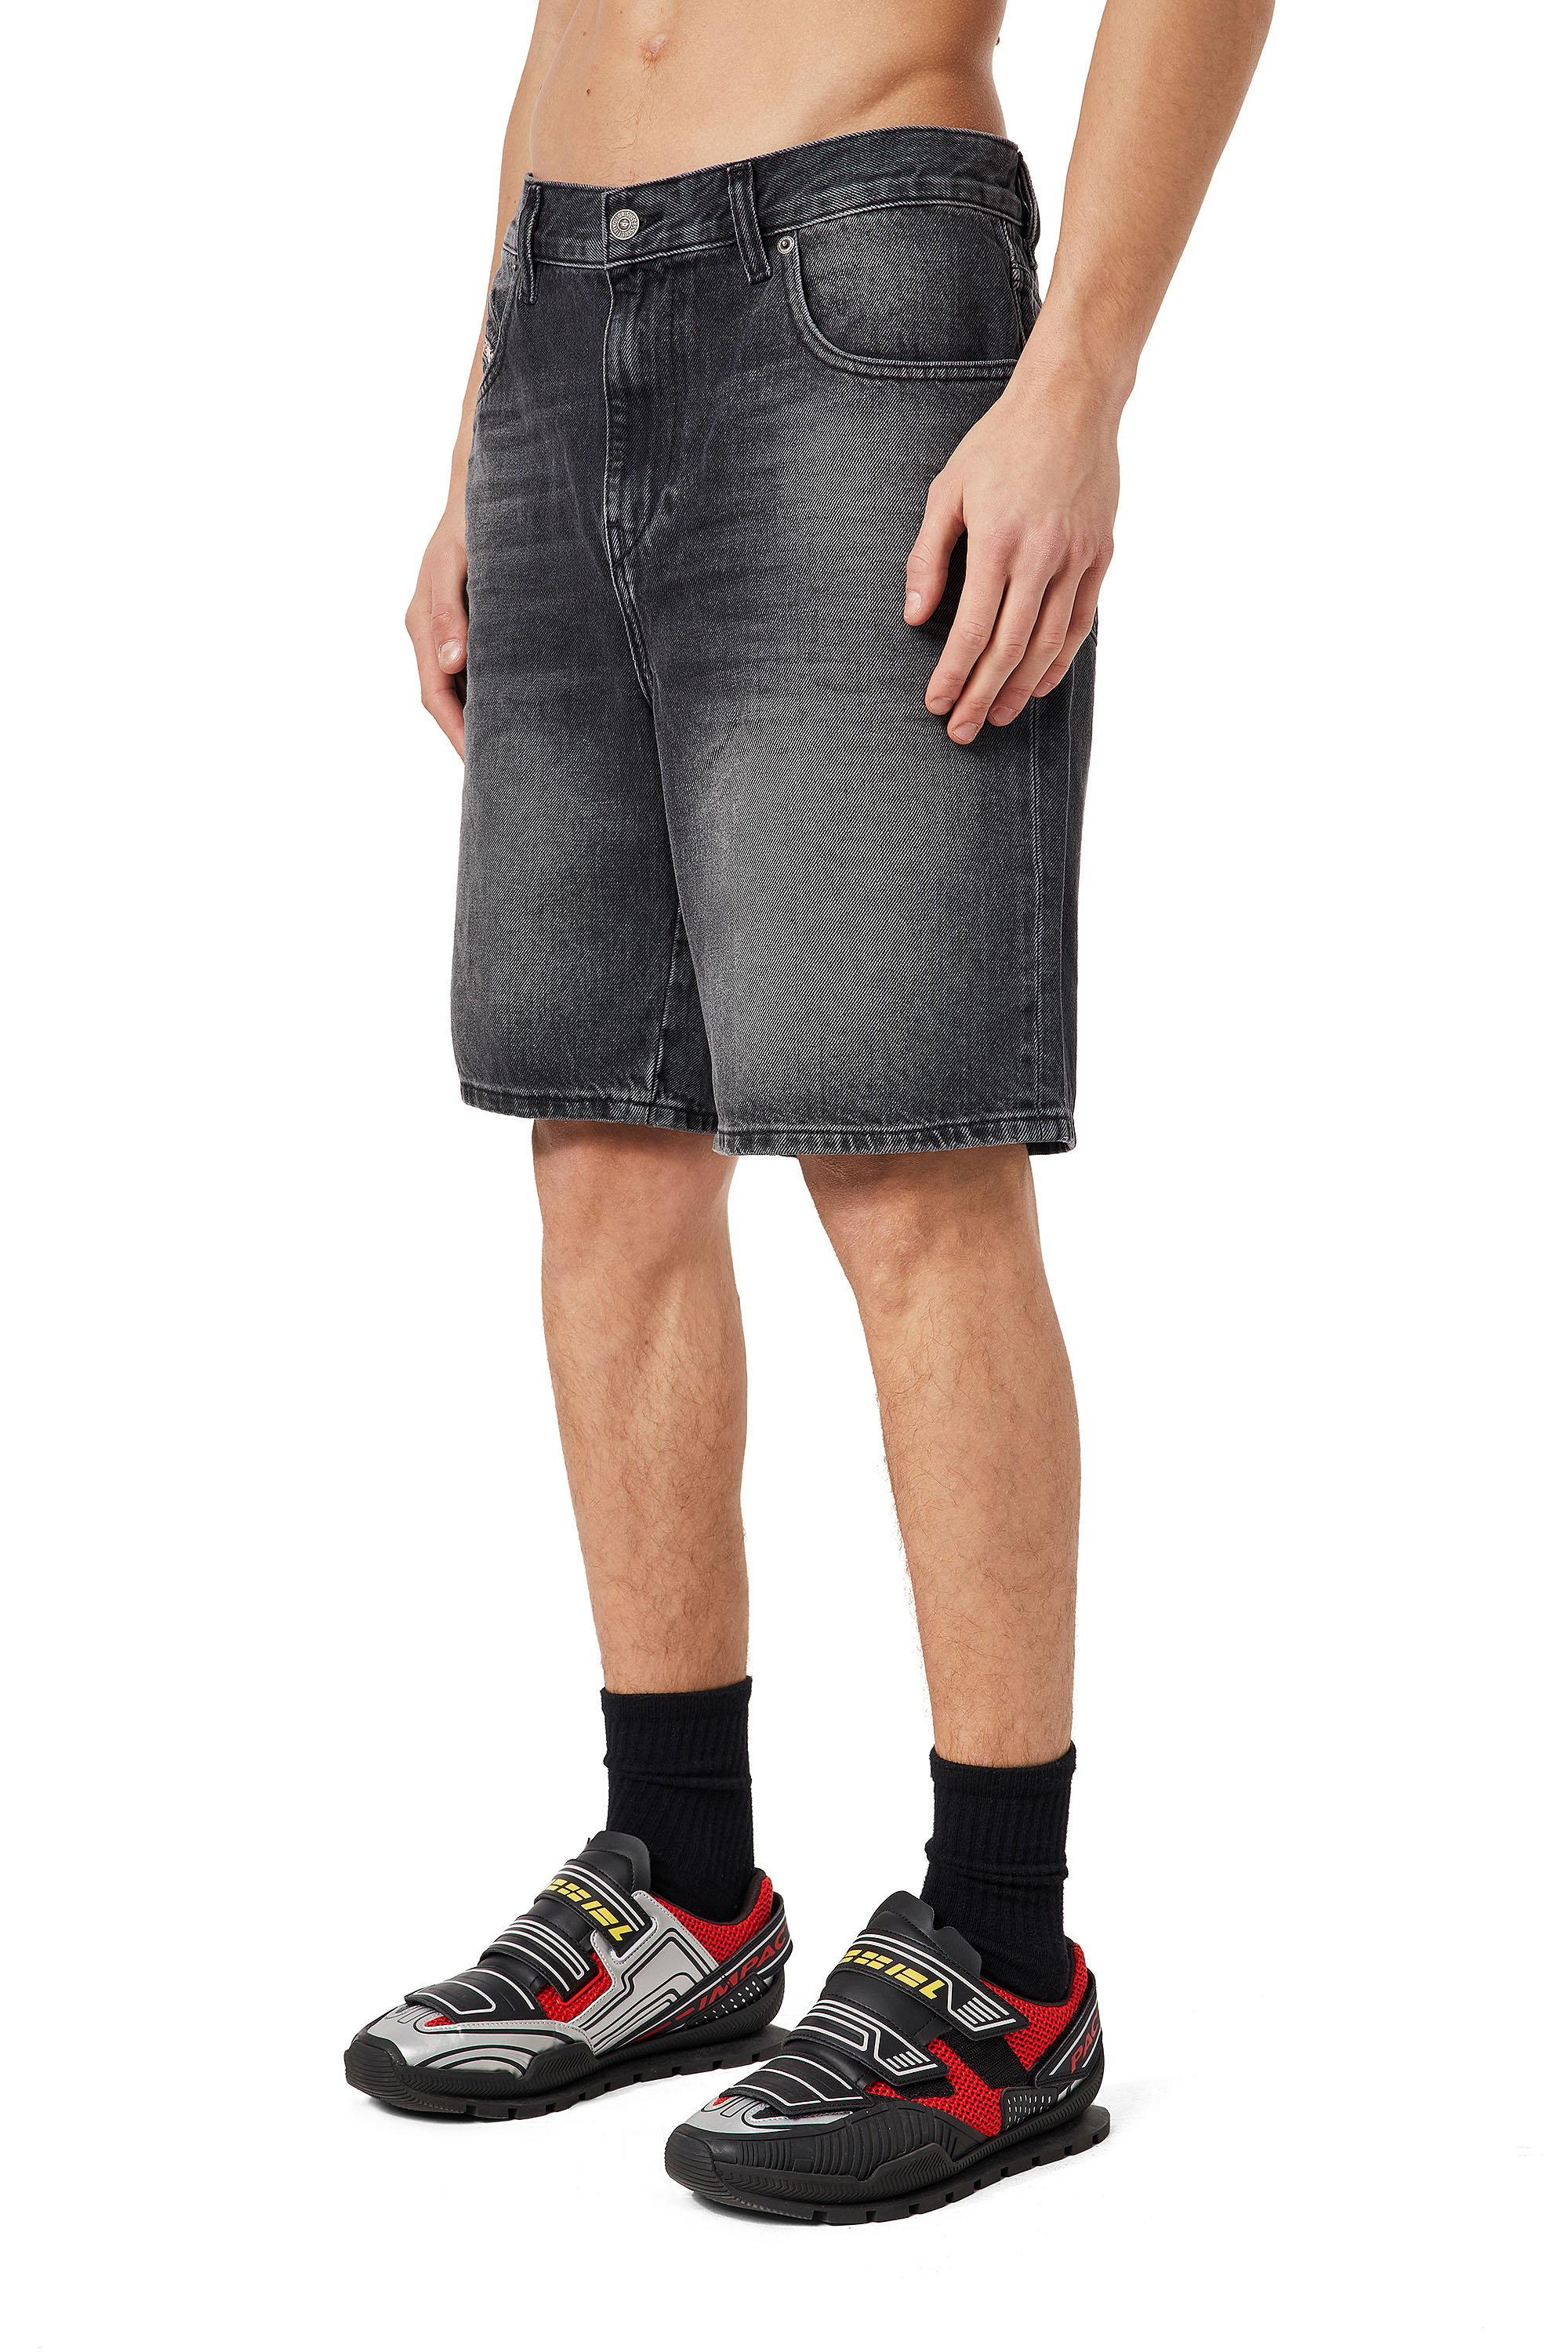 Men's Shorts: Denim, Chino, Sweat | Shop on Diesel.com